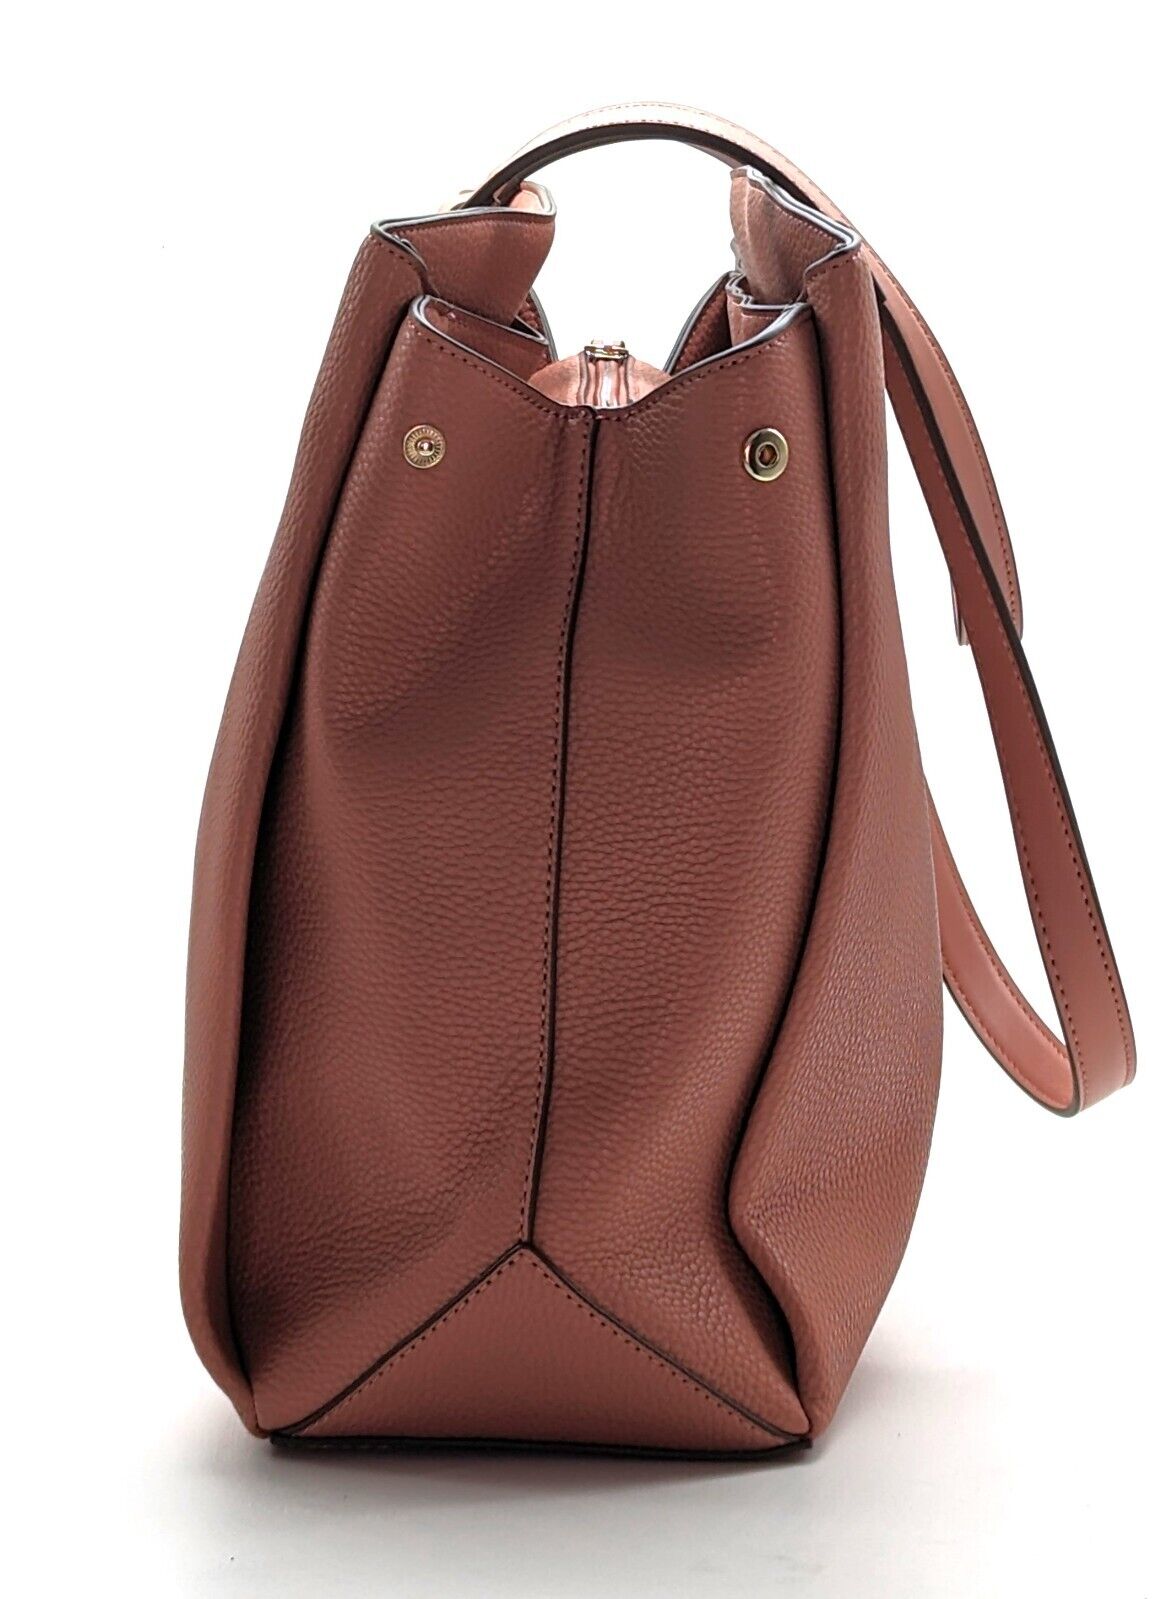 Fiorelli Grace Dusky Pink Shoulder Bag Large RRP £69